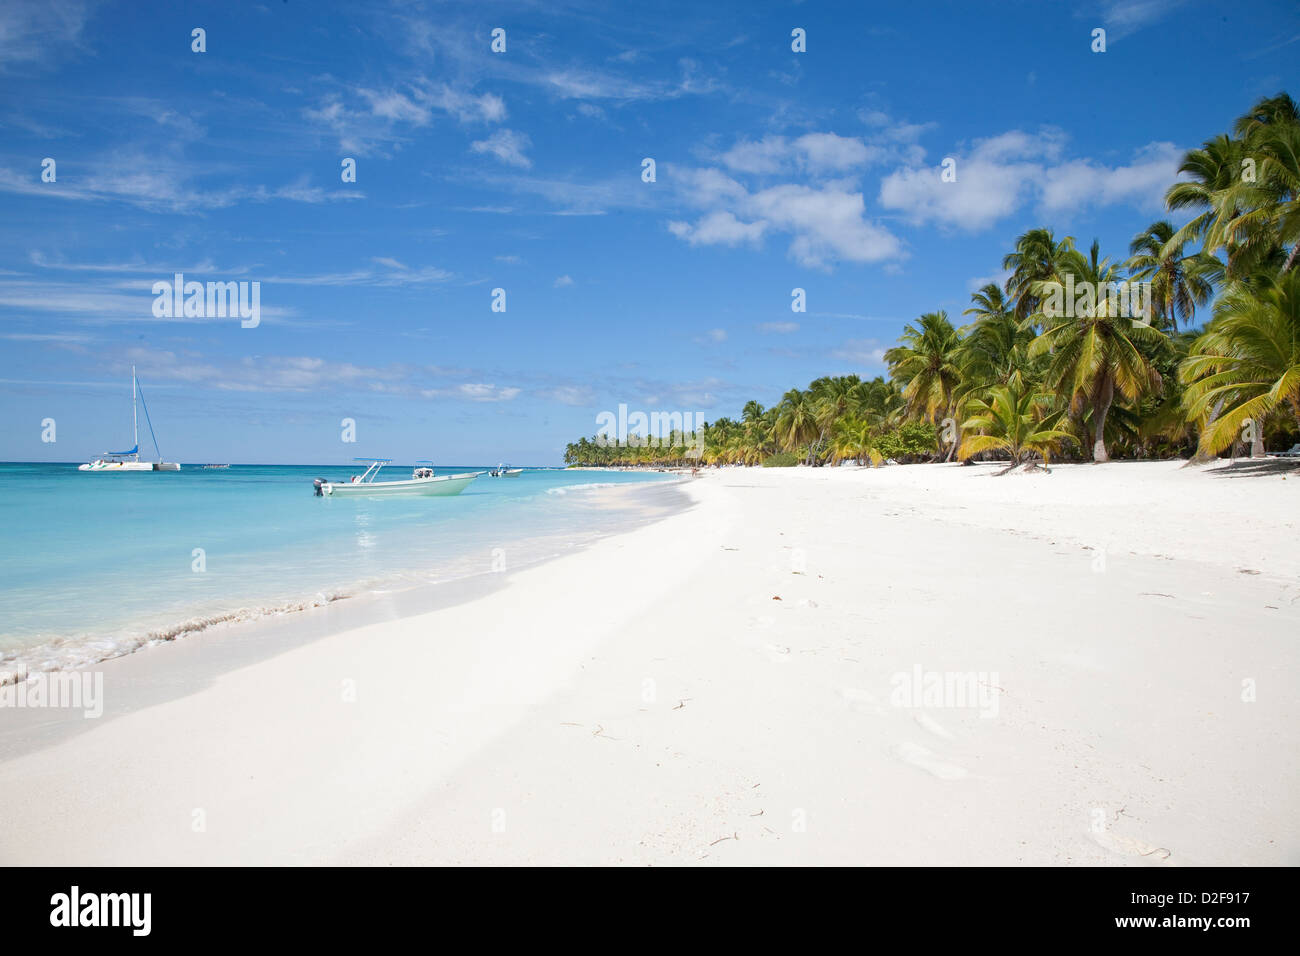 Amerika, Karibik, Insel Hispaniola, Dominikanische Republik, Isla Saona, Meer und Strand mit Palmen Stockfoto